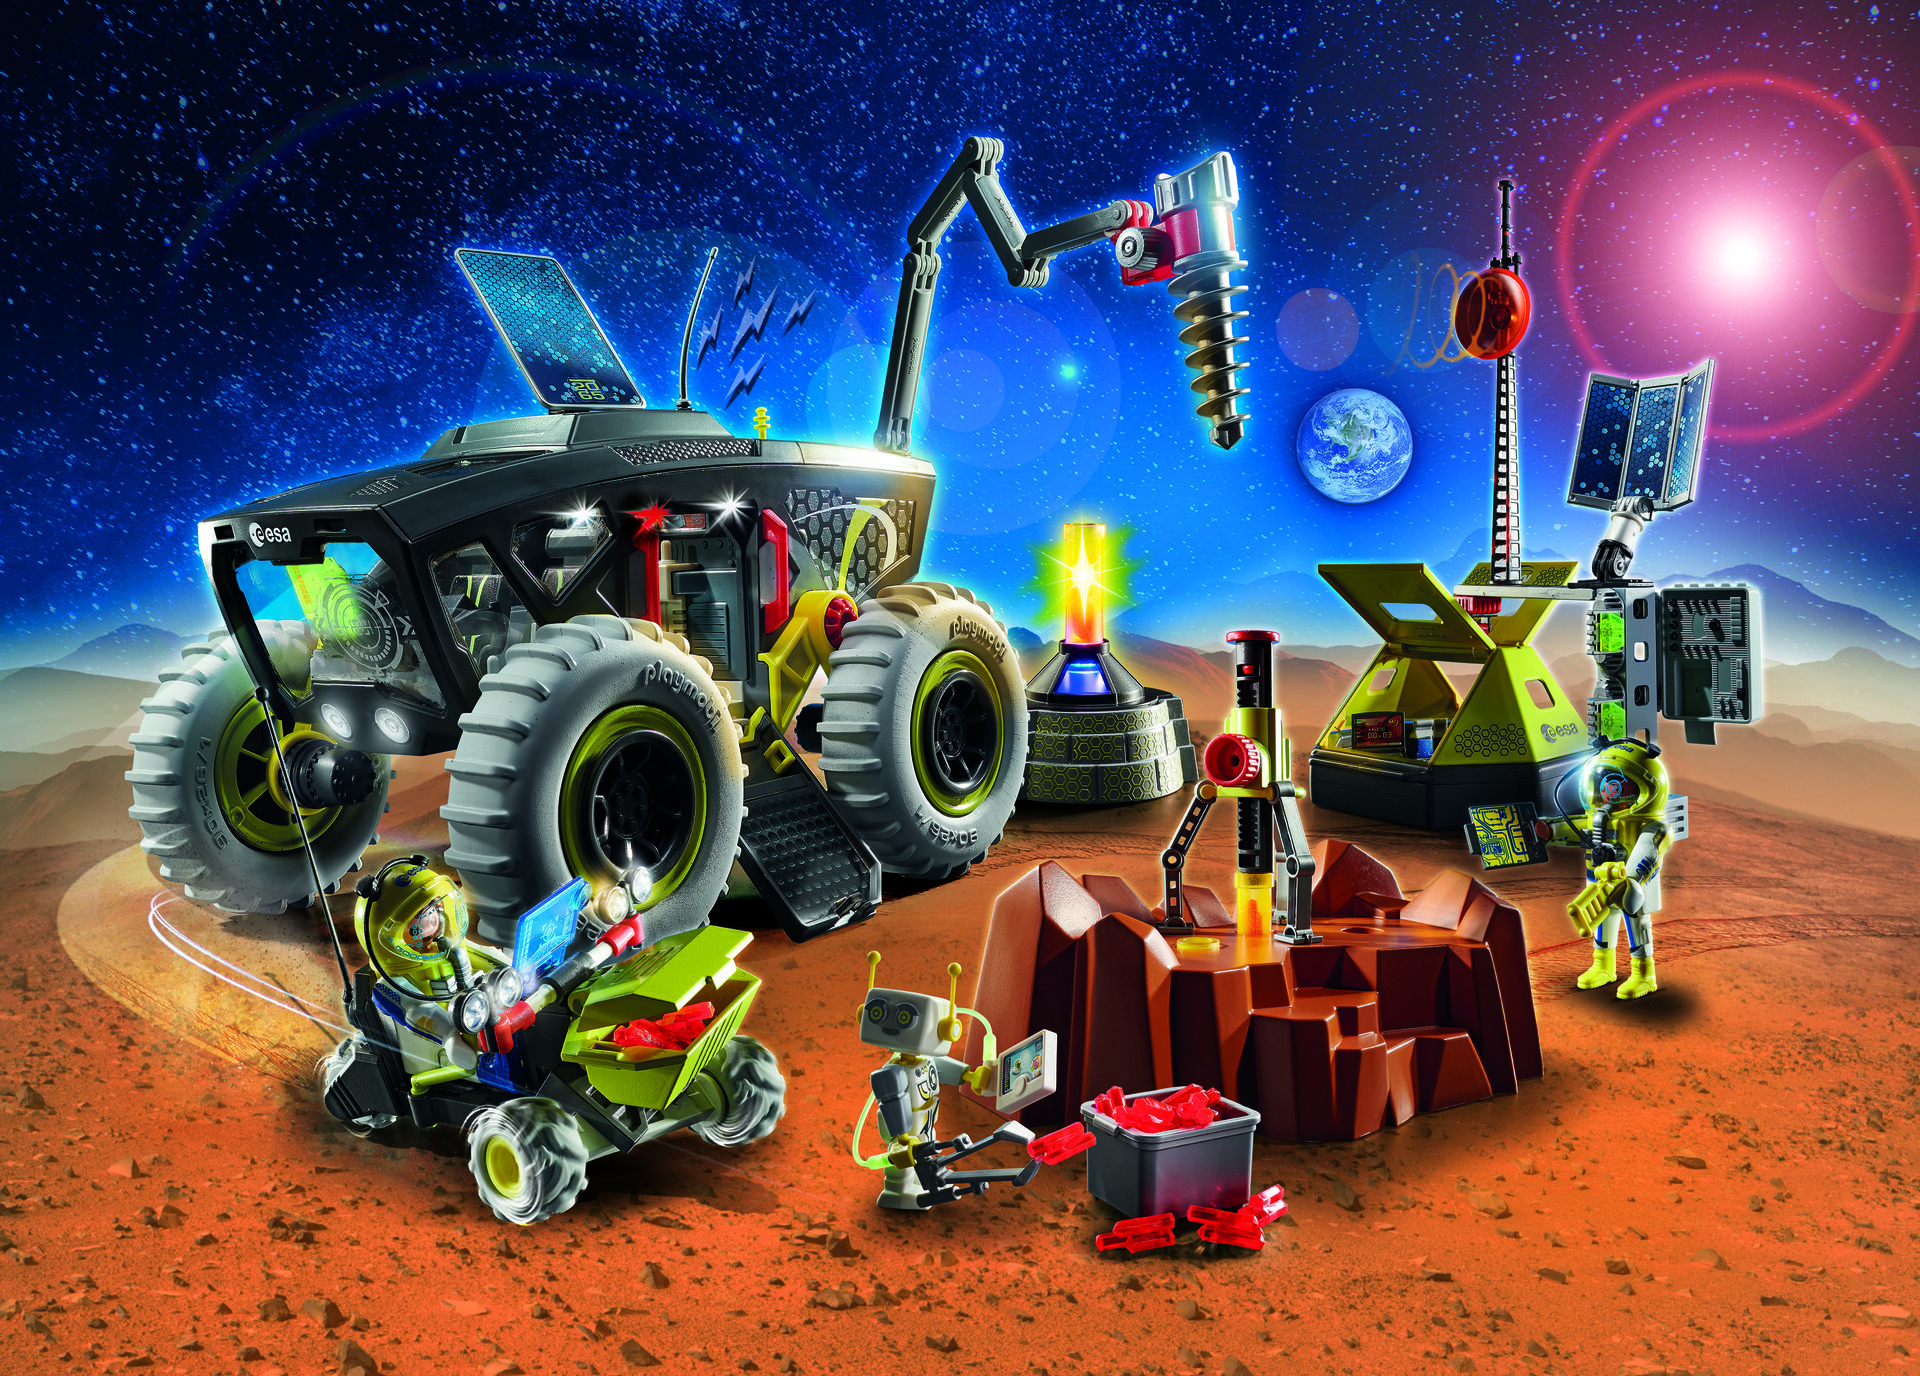 Playmobil - Mars Mission Play Box